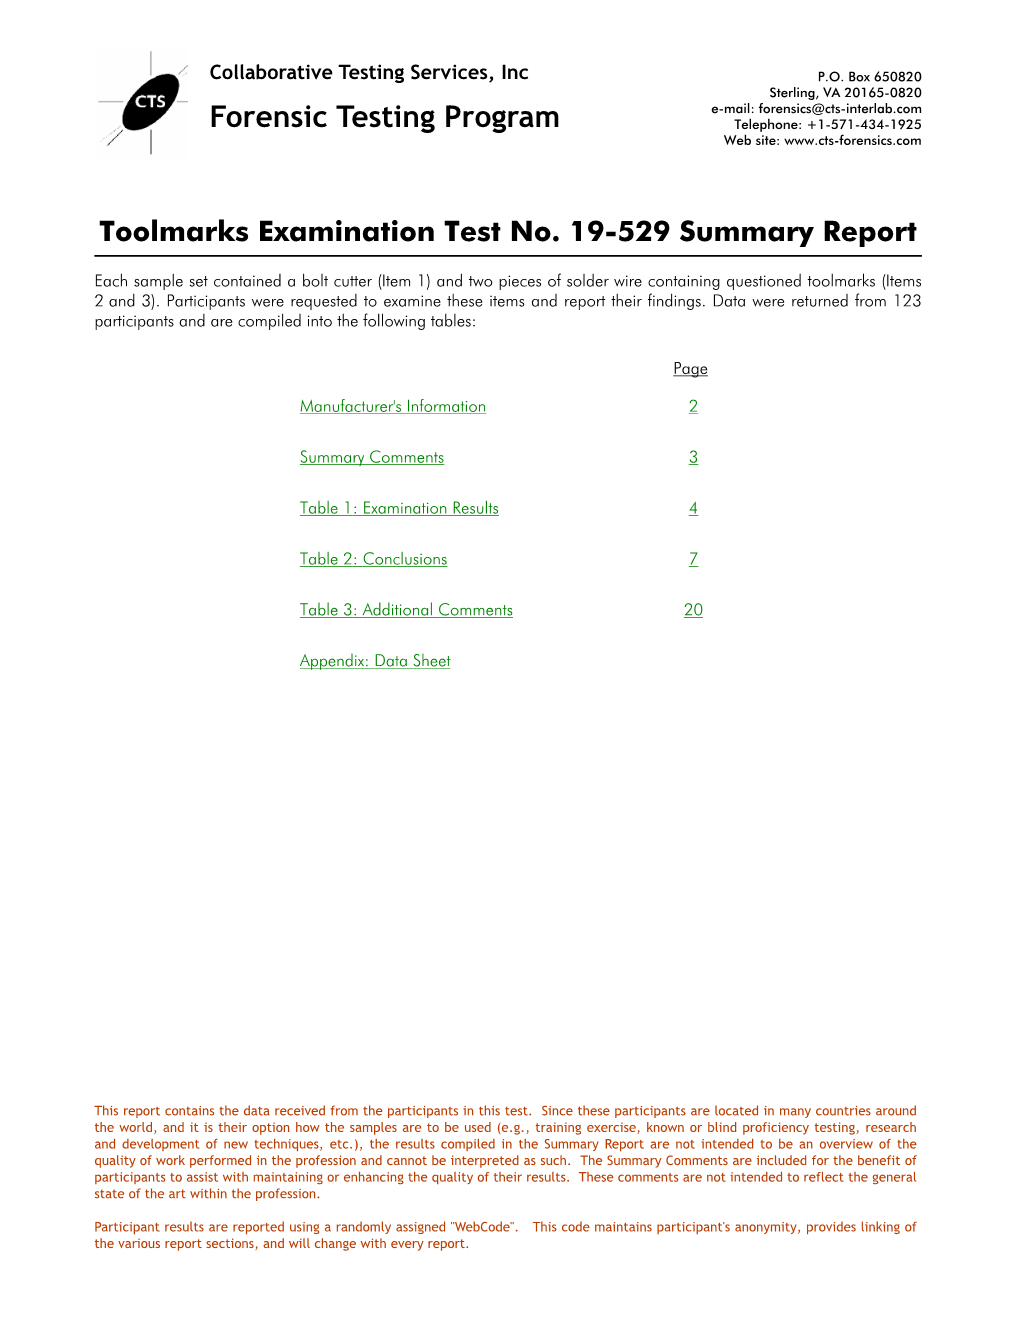 19-529 Toolmarks Examination